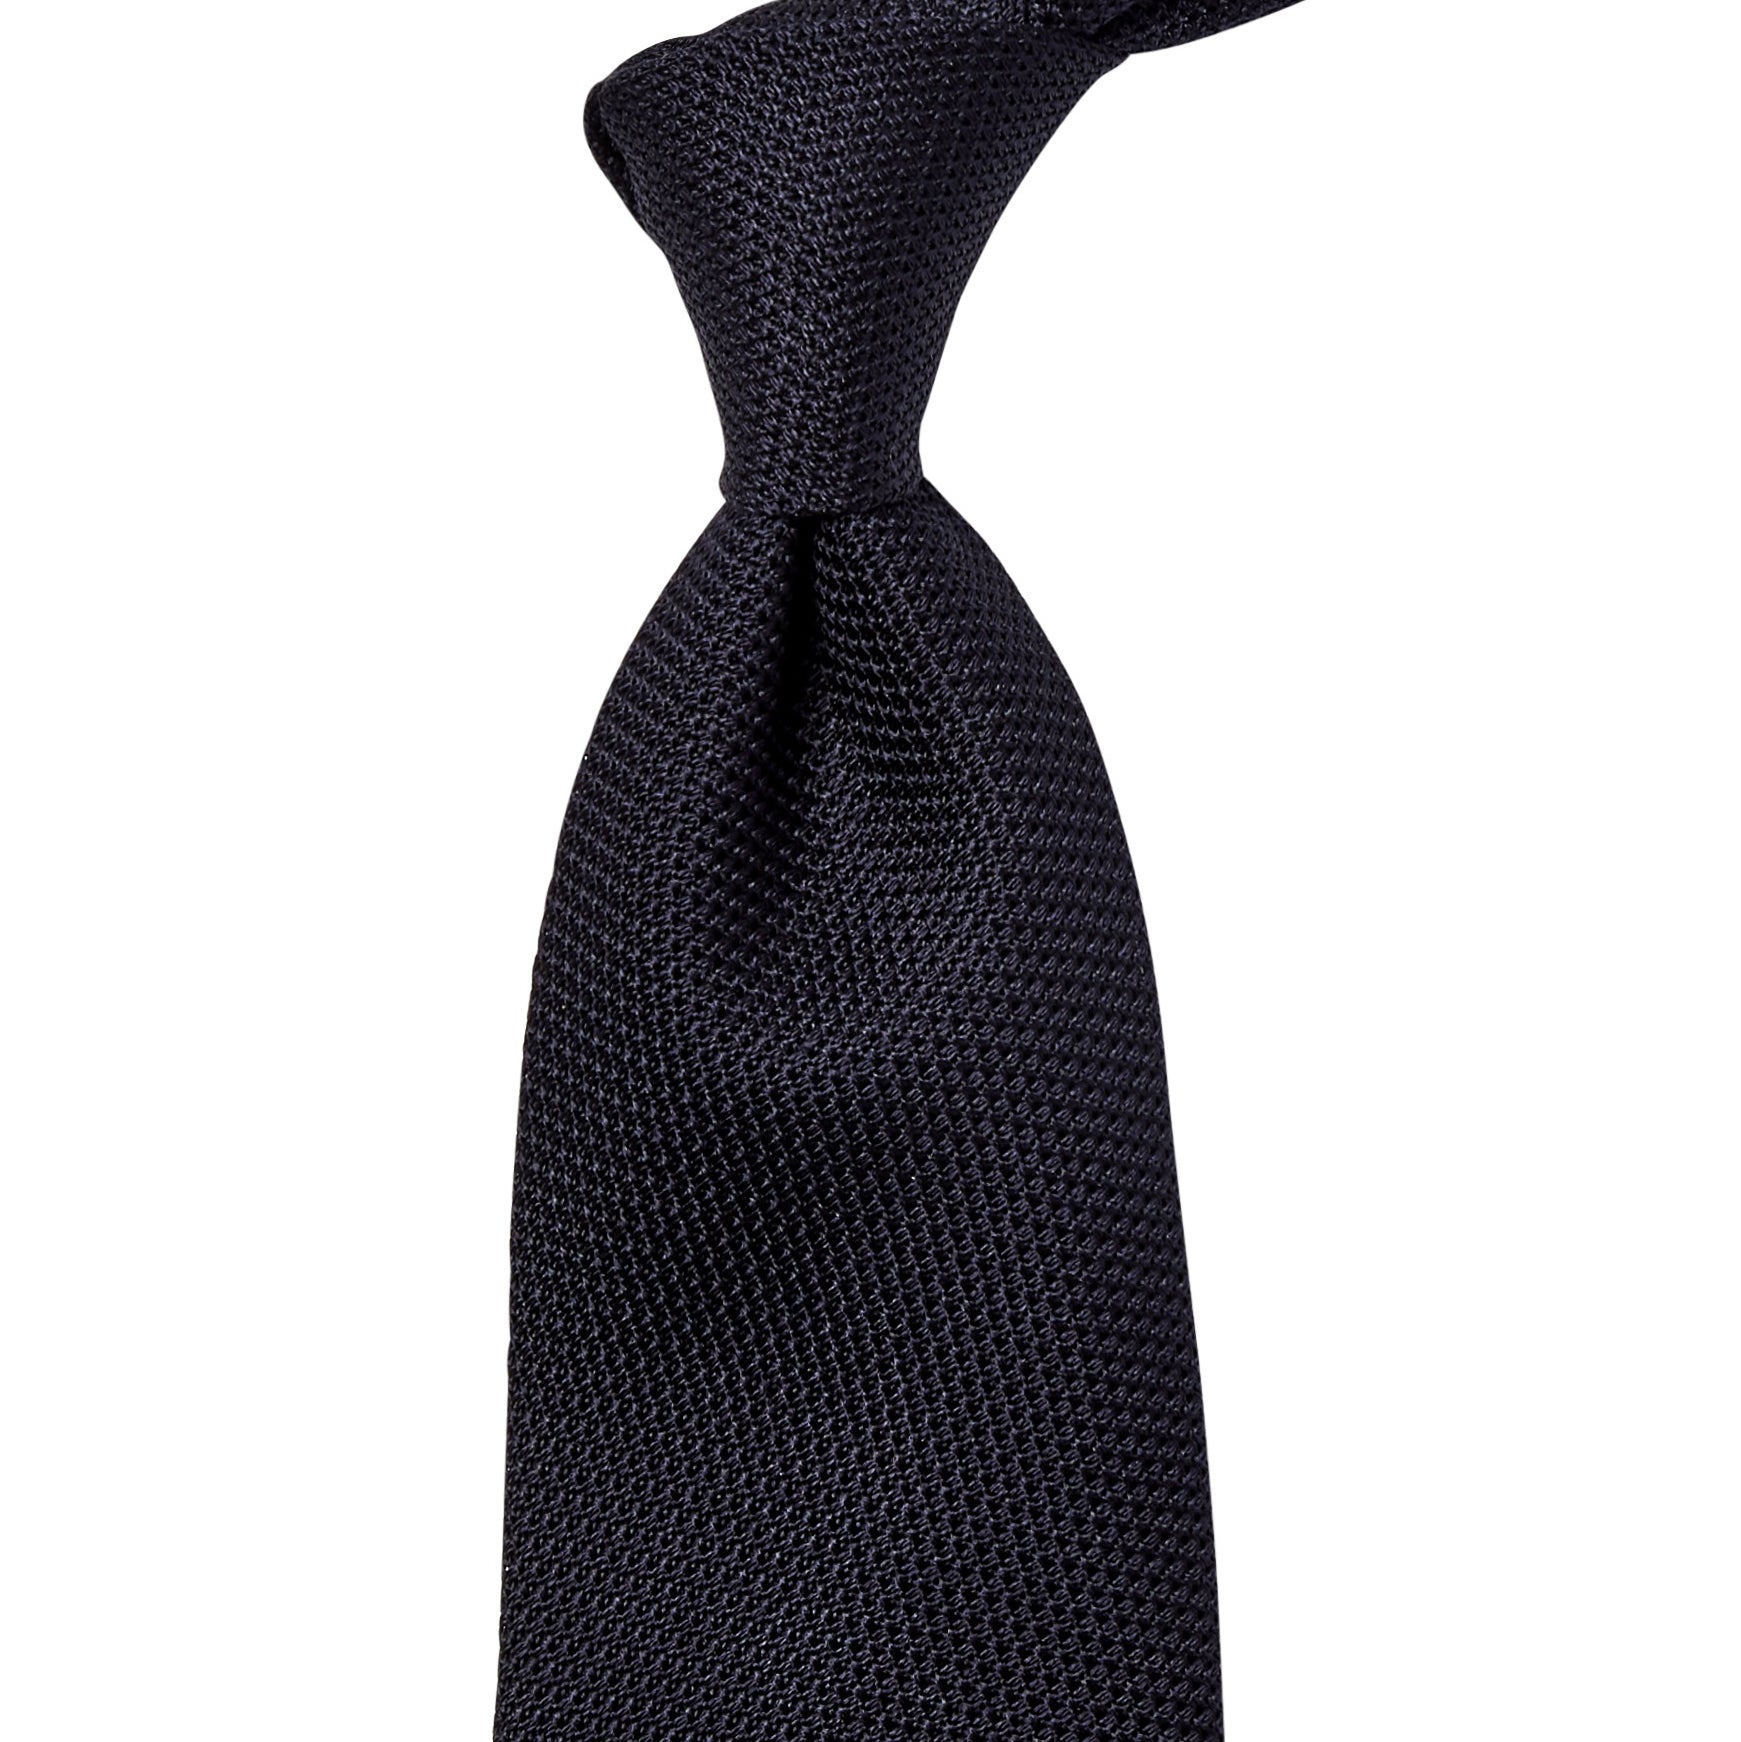 A Sovereign Grade Black Grenadine Fina Tie by KirbyAllison.com on a white background.